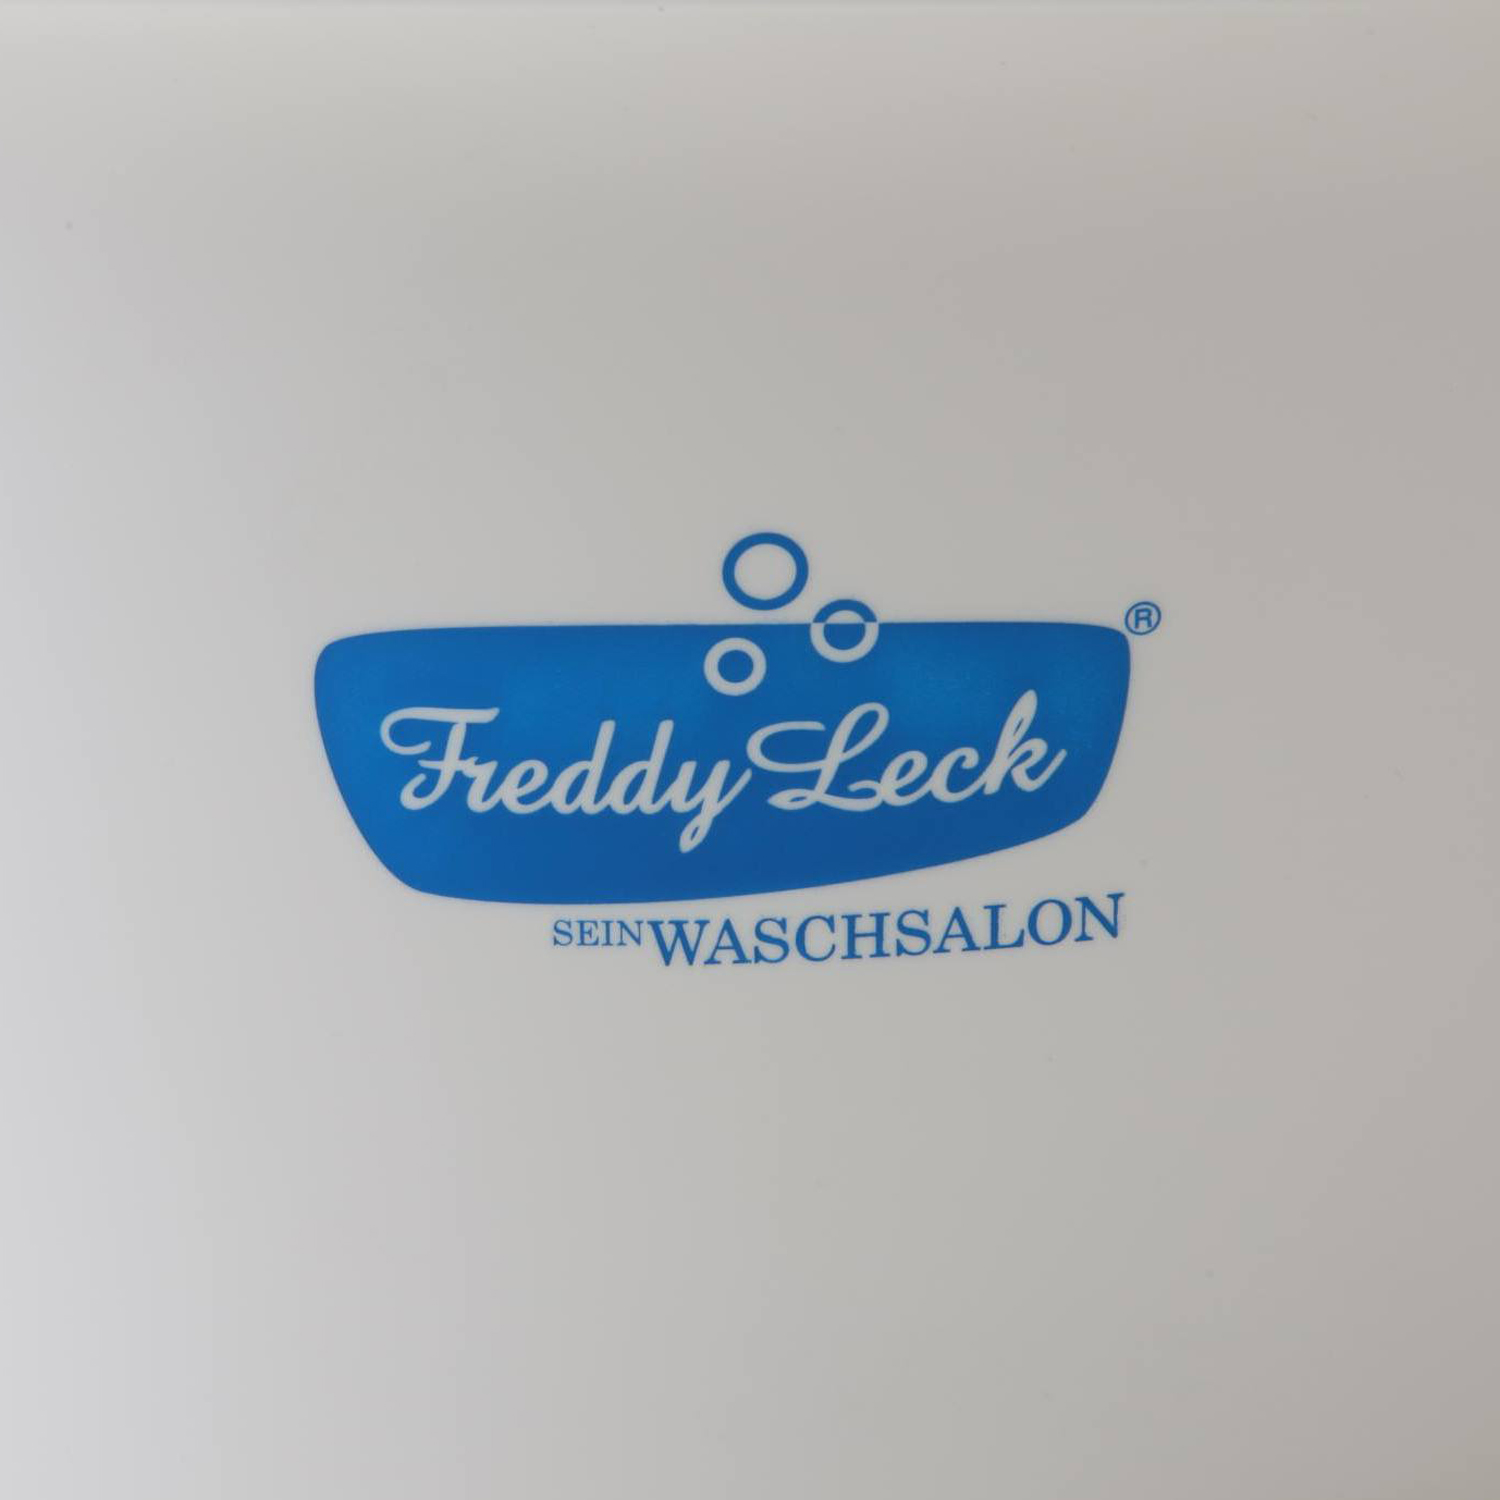 Freddy Leck sein Wasch salon/フレディ ウォッシュタブ